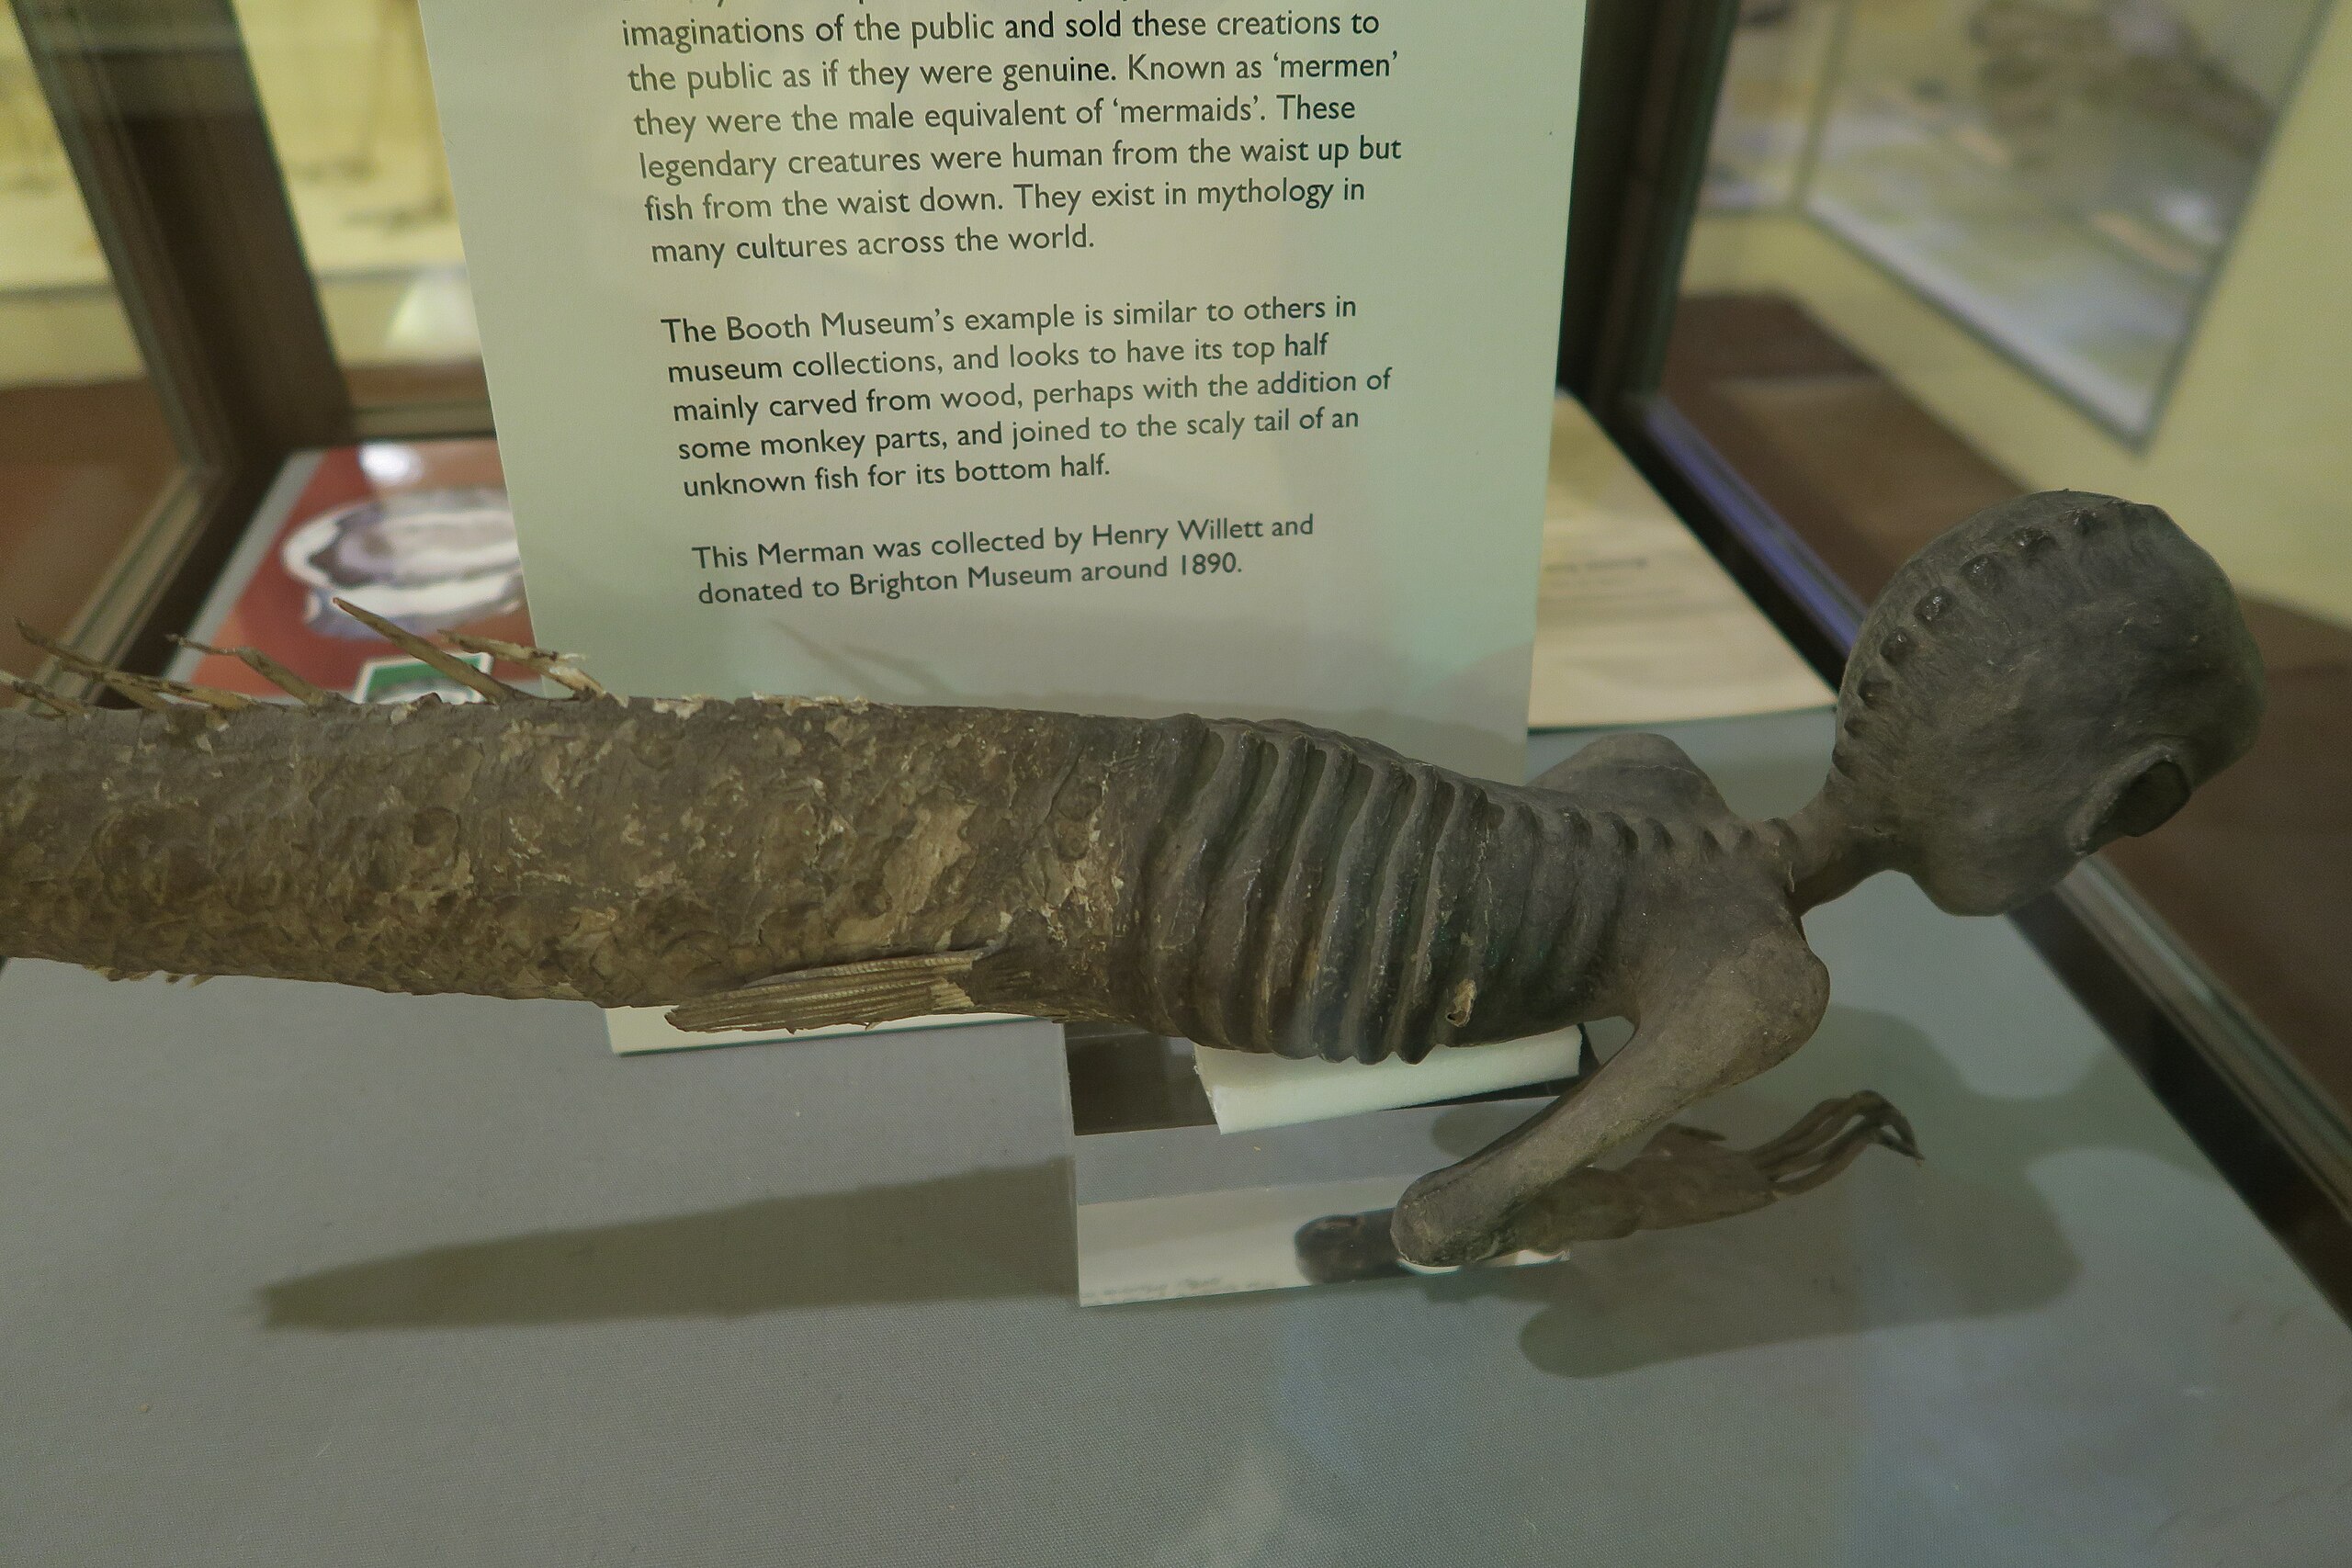 File:Merman in Booth Museum of Natural History 2.jpg - Wikipedia